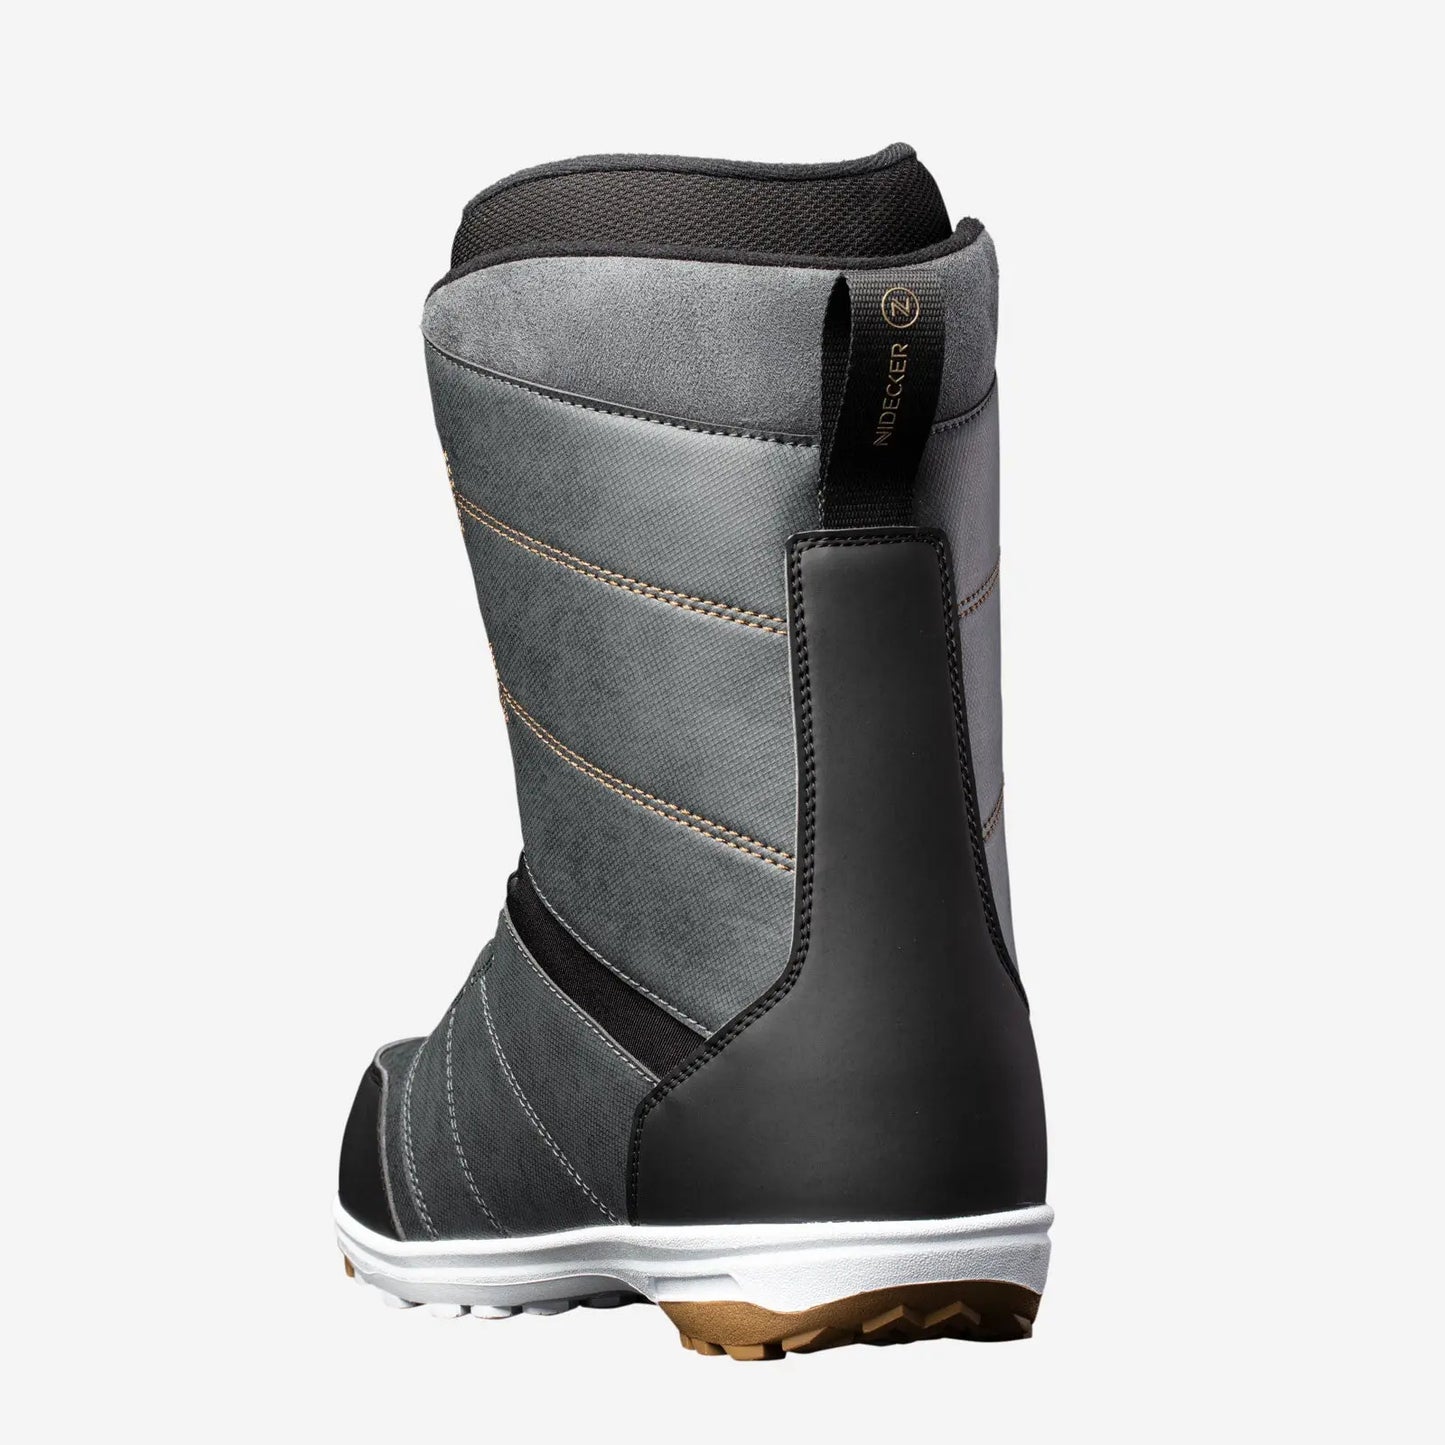 Nidecker Ranger Snowboard Boots - Gray NIDECKER